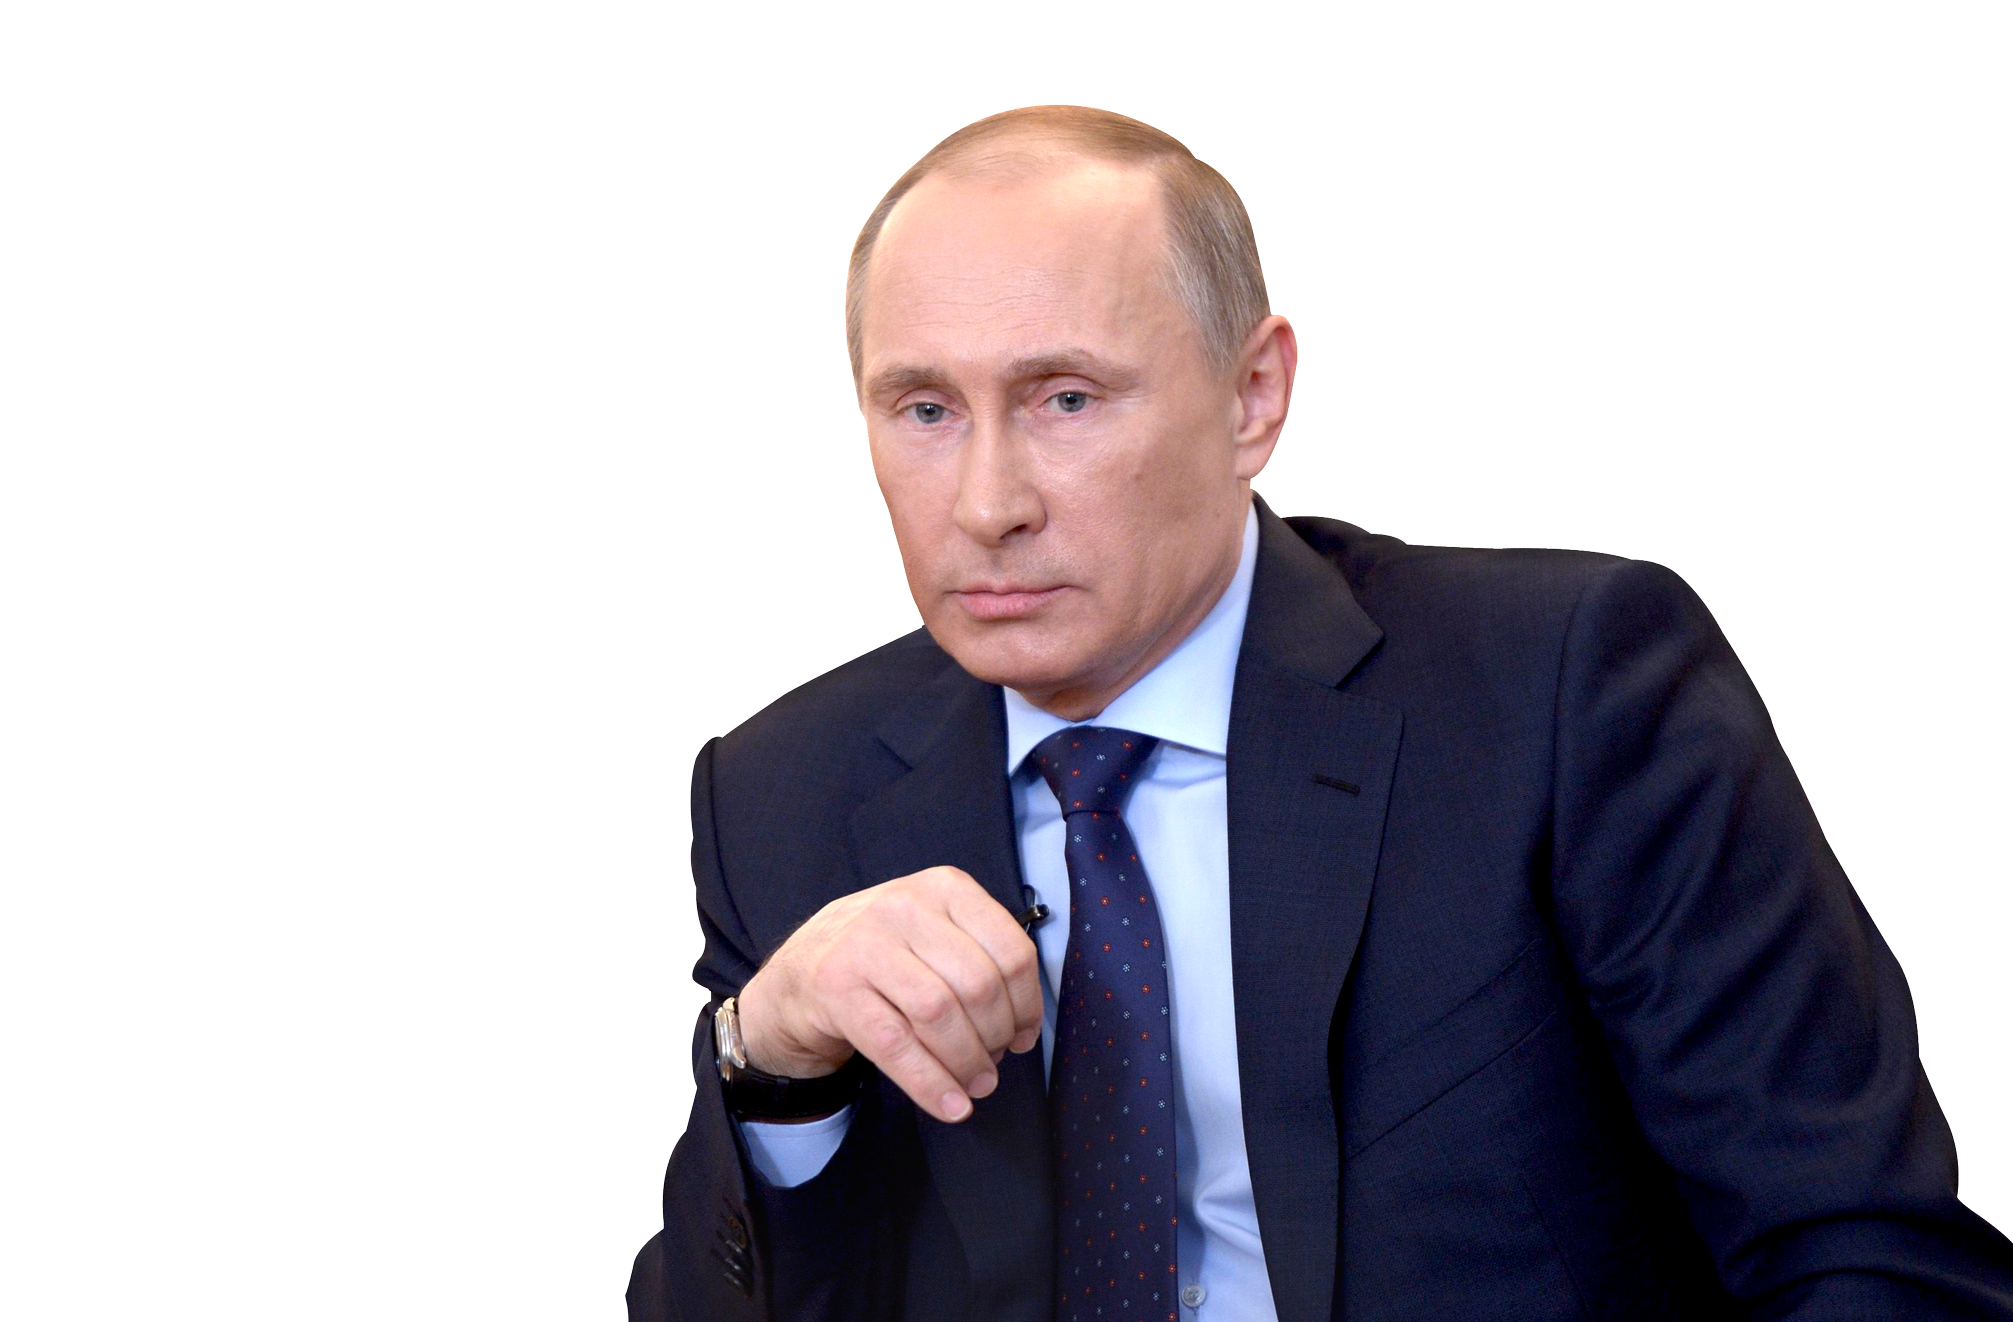 Vladimir Putin Transparent Image